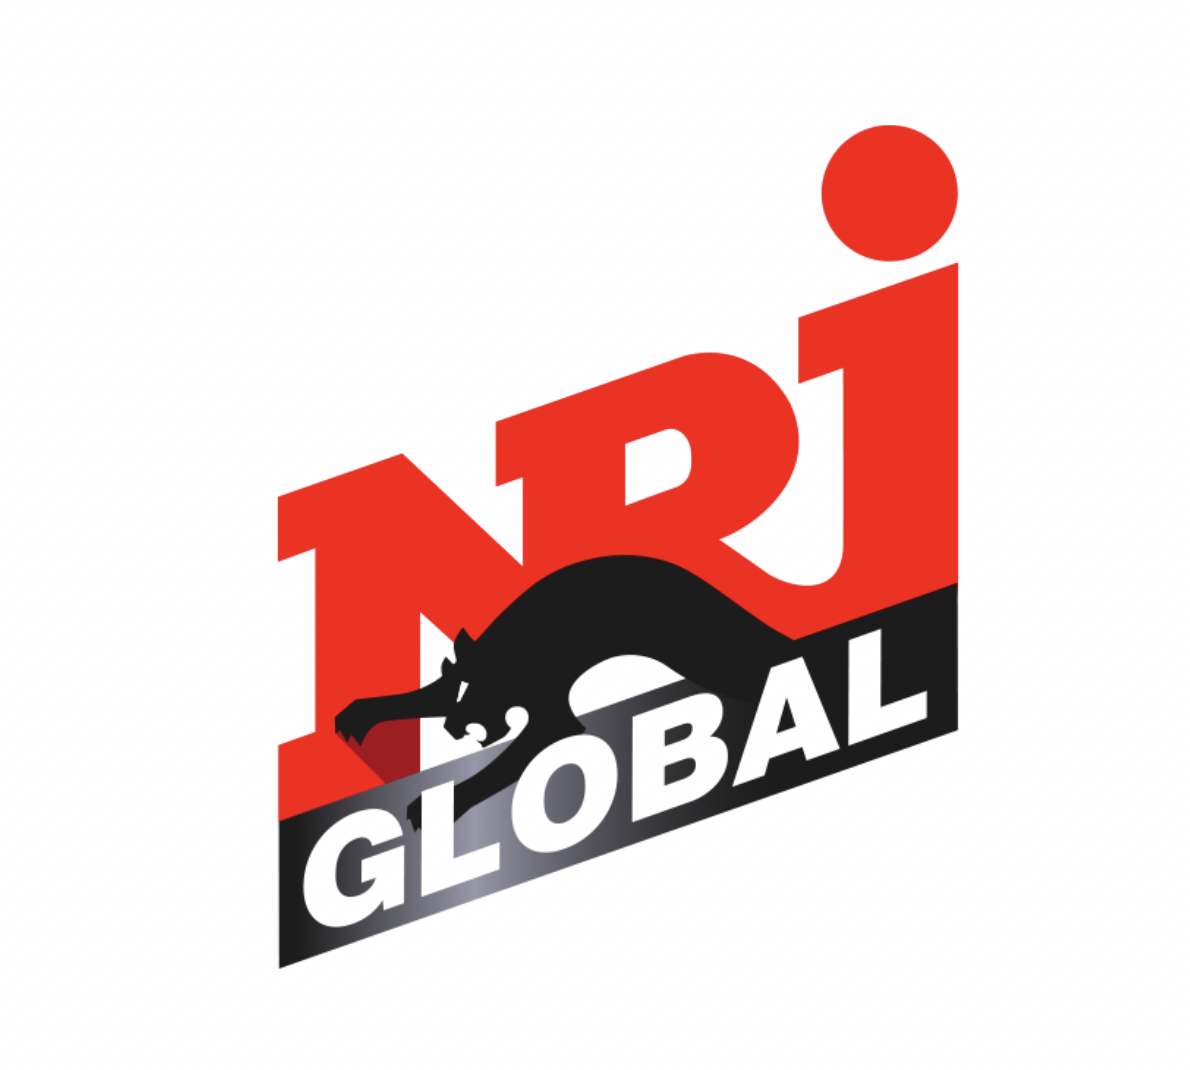 NRJ Global certifie son offre podcasts avec l'ACPM